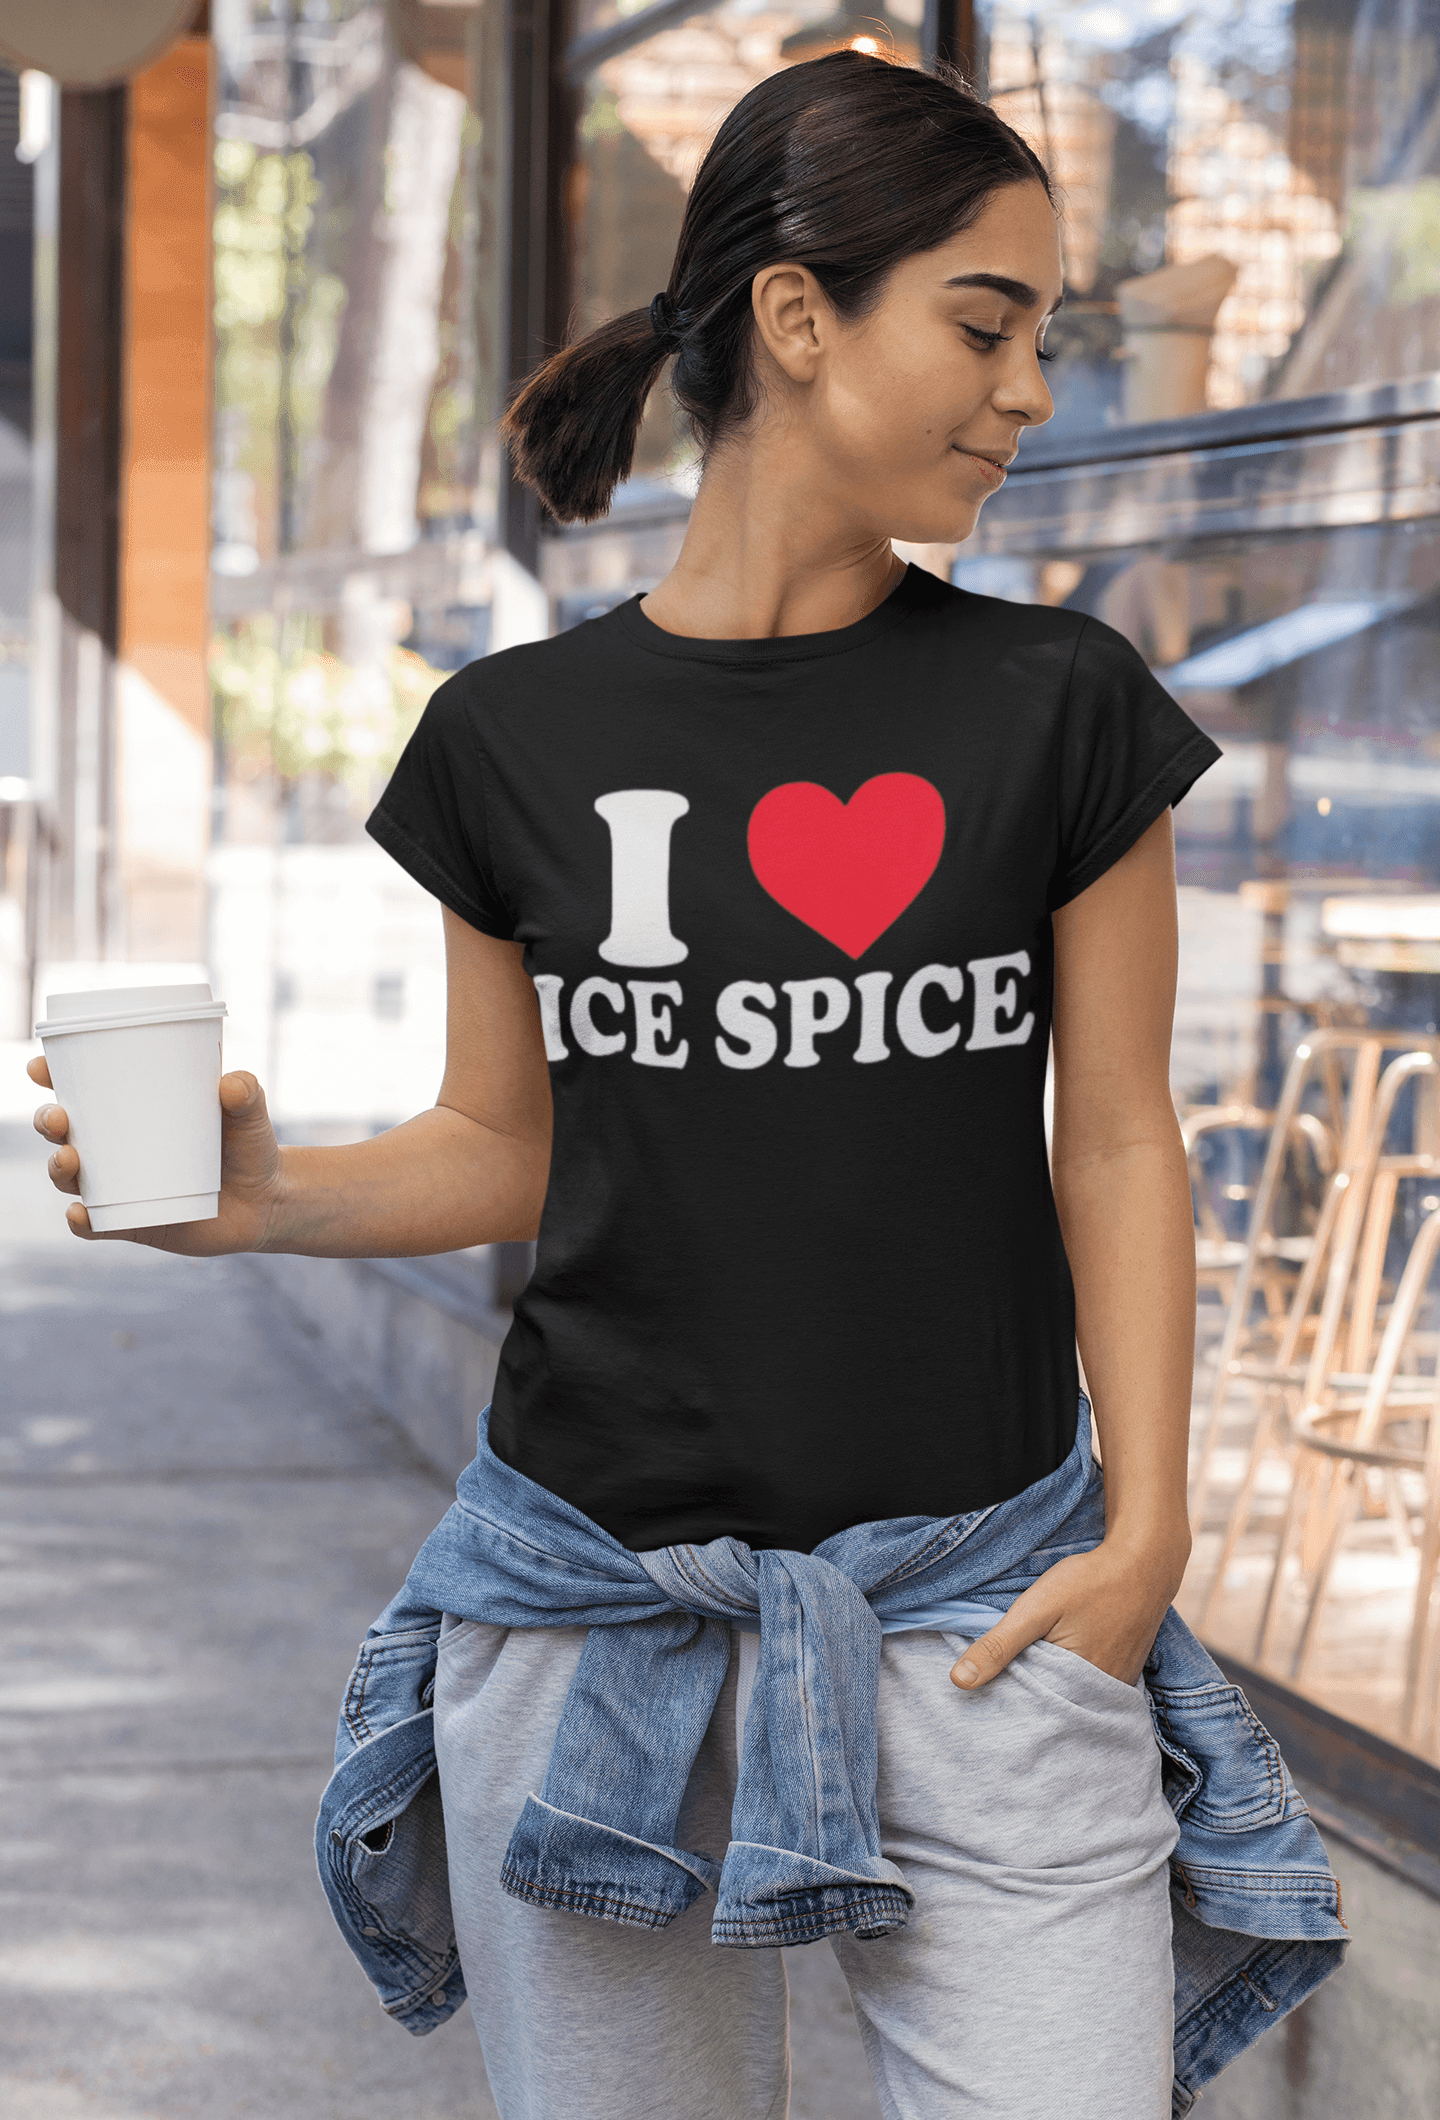 I Love Ice Spice T-Shirt Ultra Soft Feel 100% Cotton Unisex Tee - TopKoalaTee